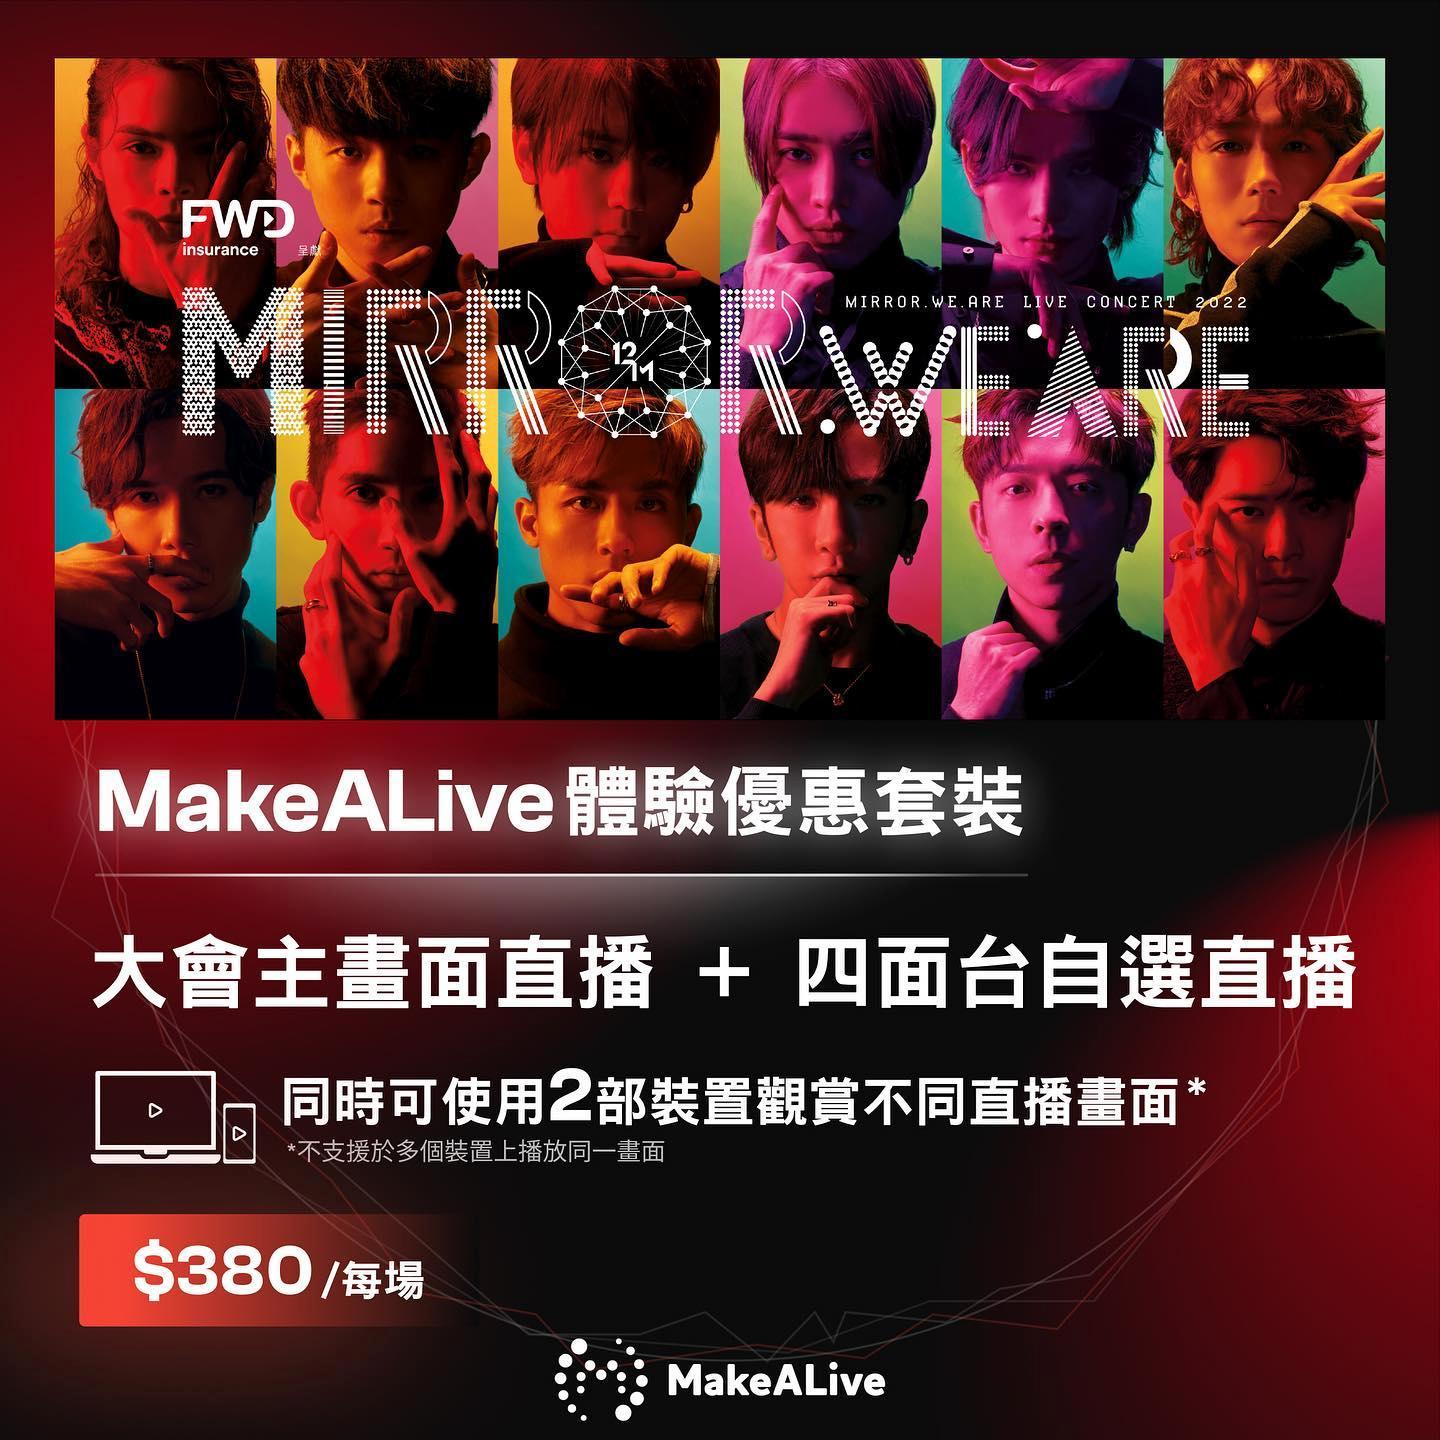 MakeALive體驗優惠套裝為每場380元，包括大會主畫面直播及四面台自選直播， 同時可使用2部裝置觀賞不同直播畫面。（fb圖片）